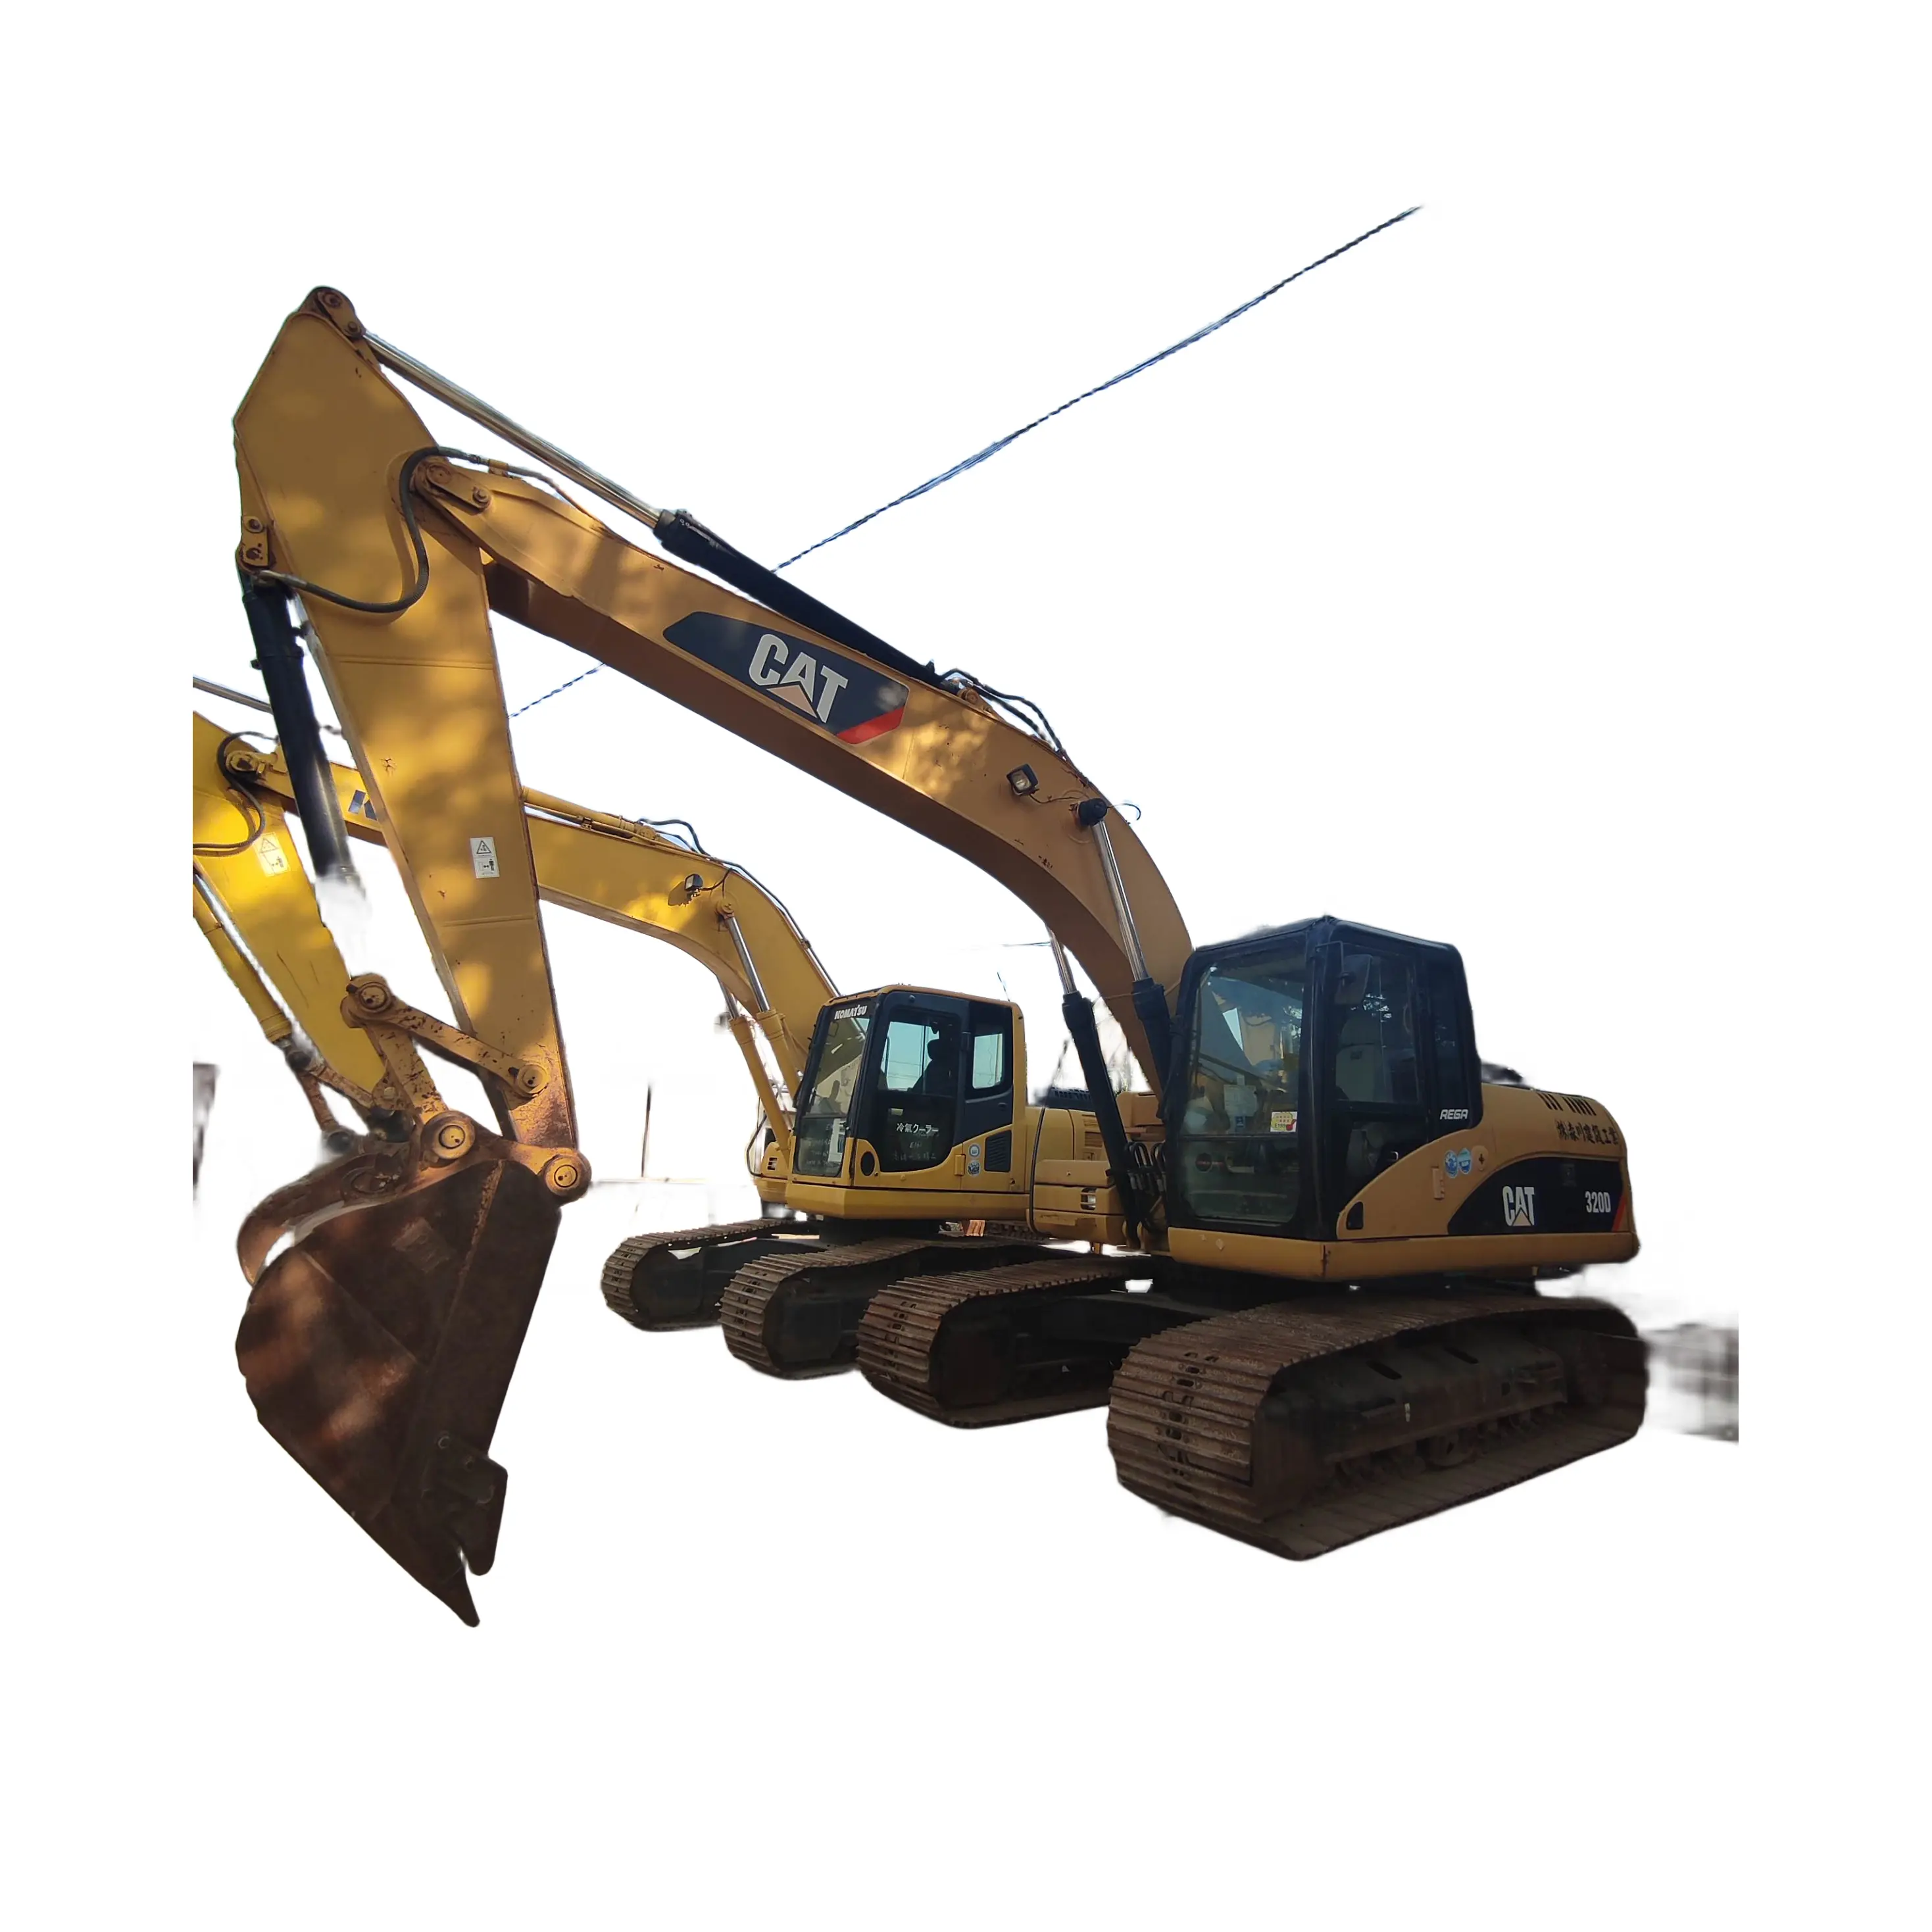 L'escavatore Caterpillar di marca famosa più classico usato 320 usato Cat320d Cat325C Cat330D Cat349D grandi macchine movimento terra